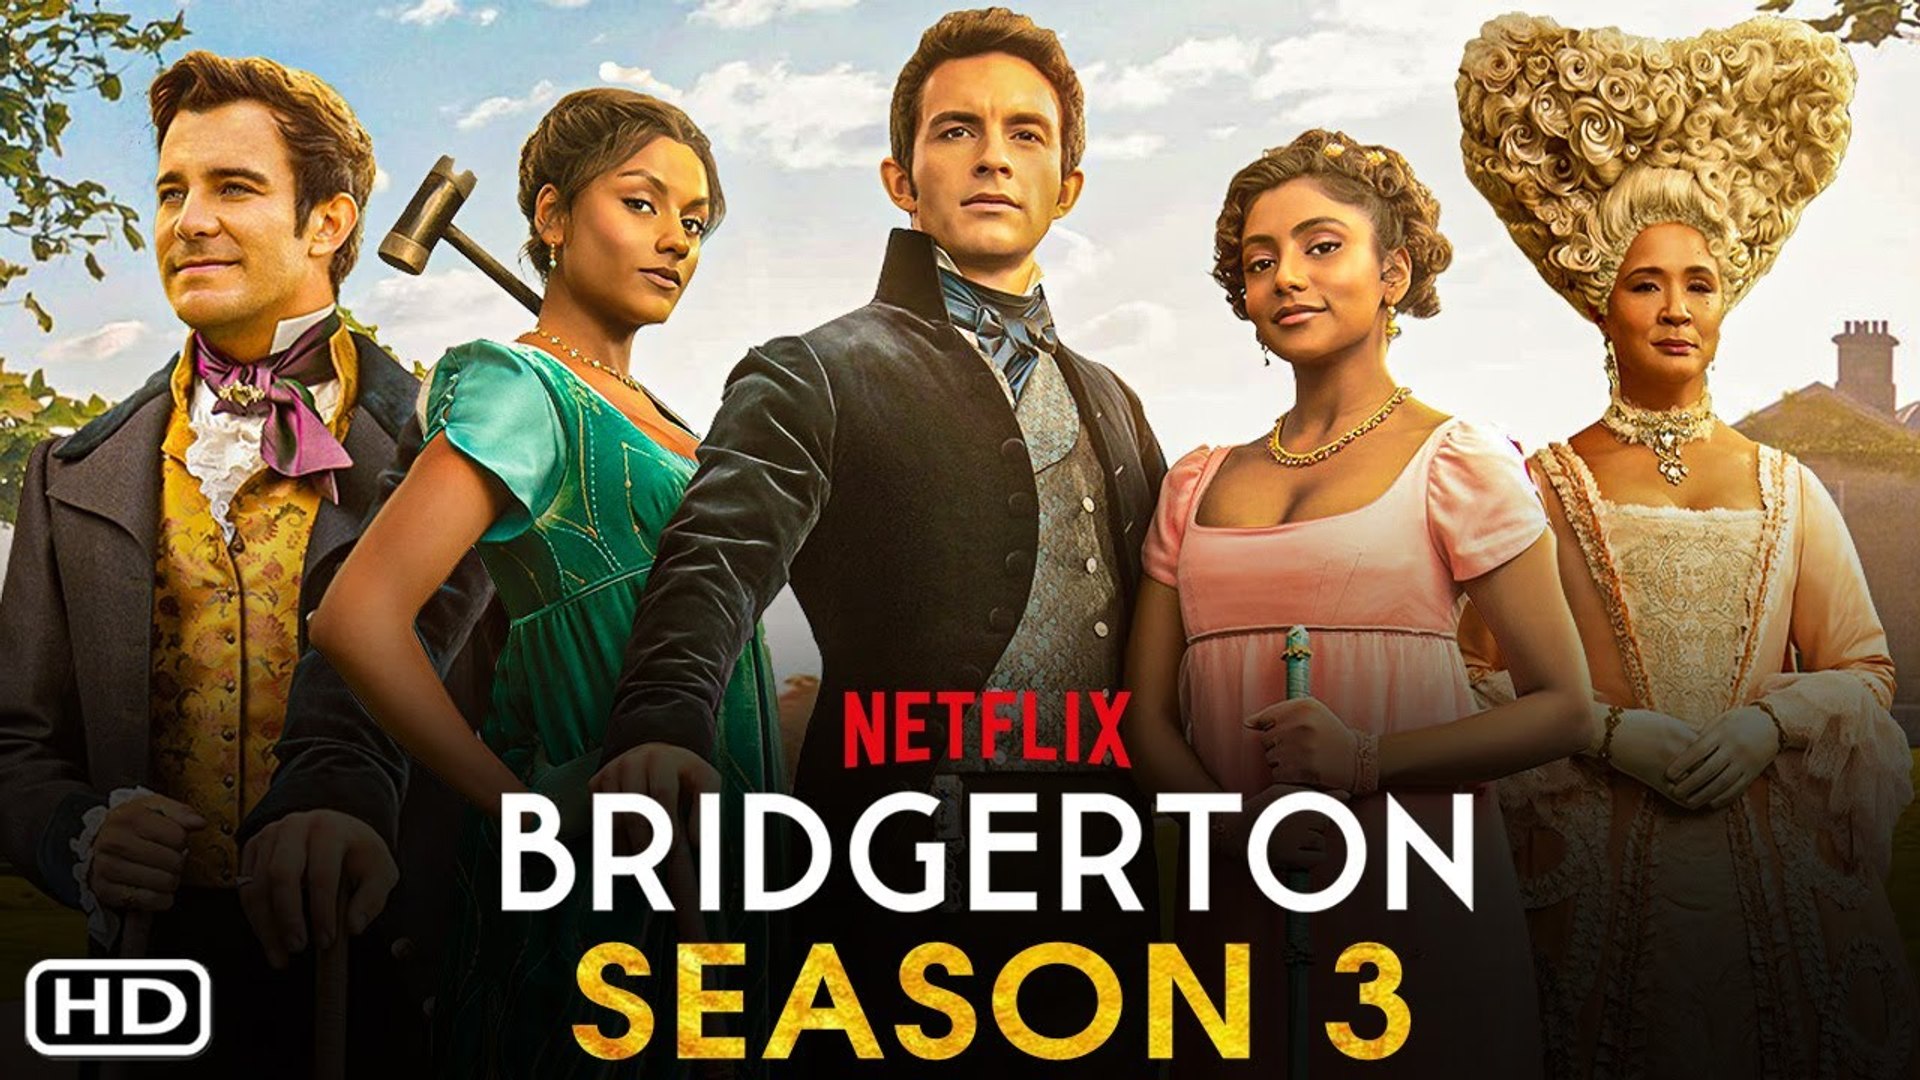 Bridgerton' Season 3: Release Date, Trailer, And More